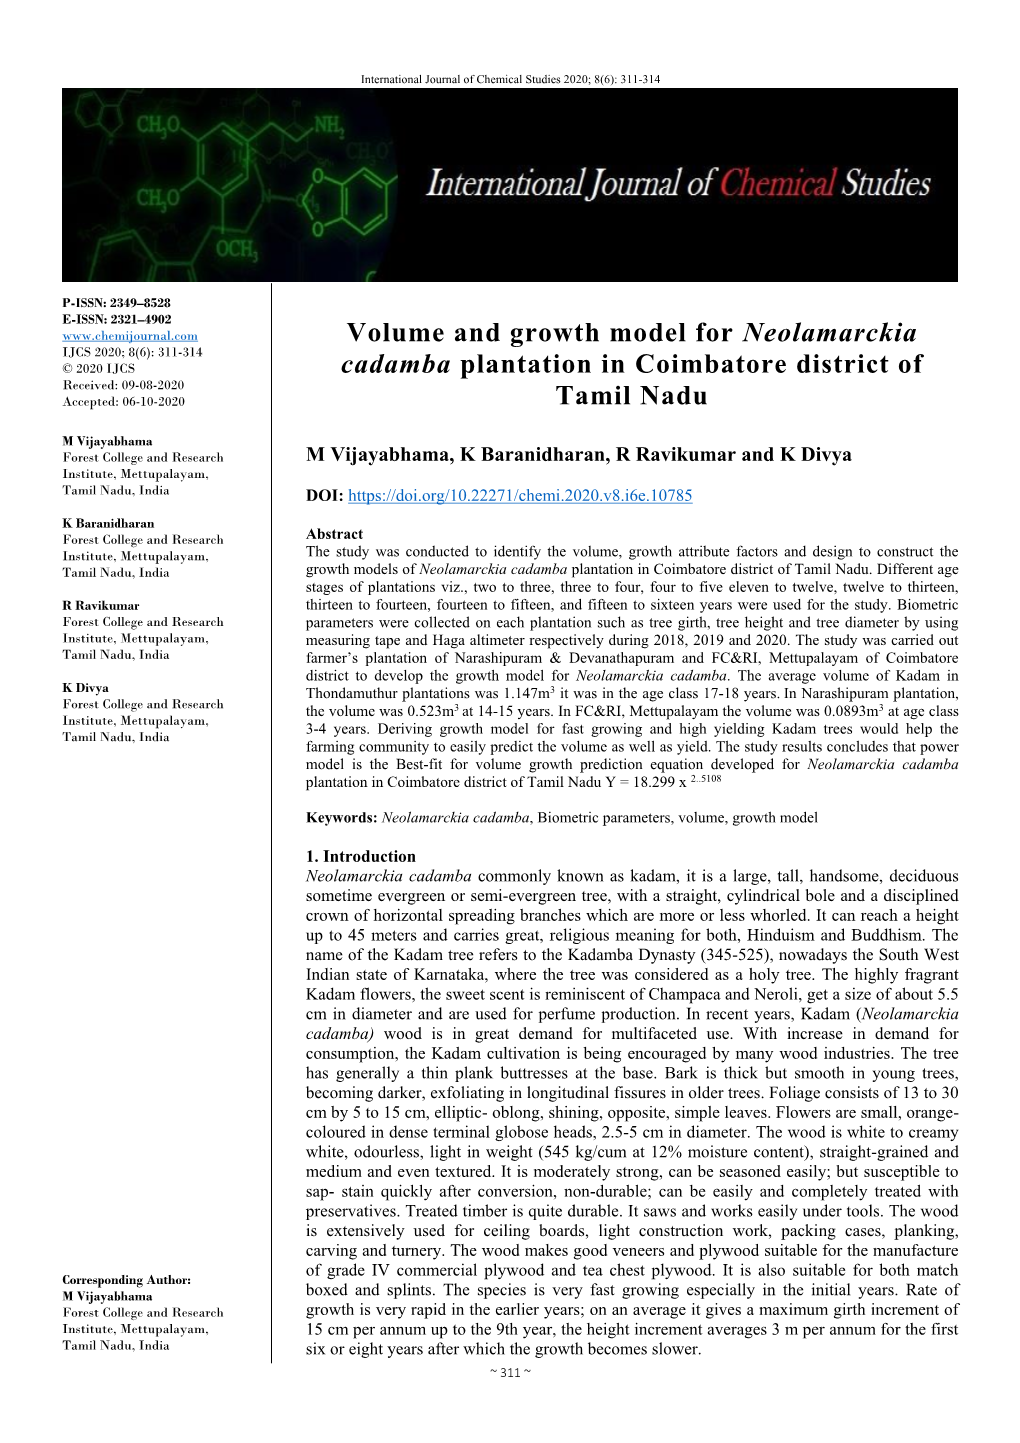 Volume and Growth Model for Neolamarckia Cadamba Plantation